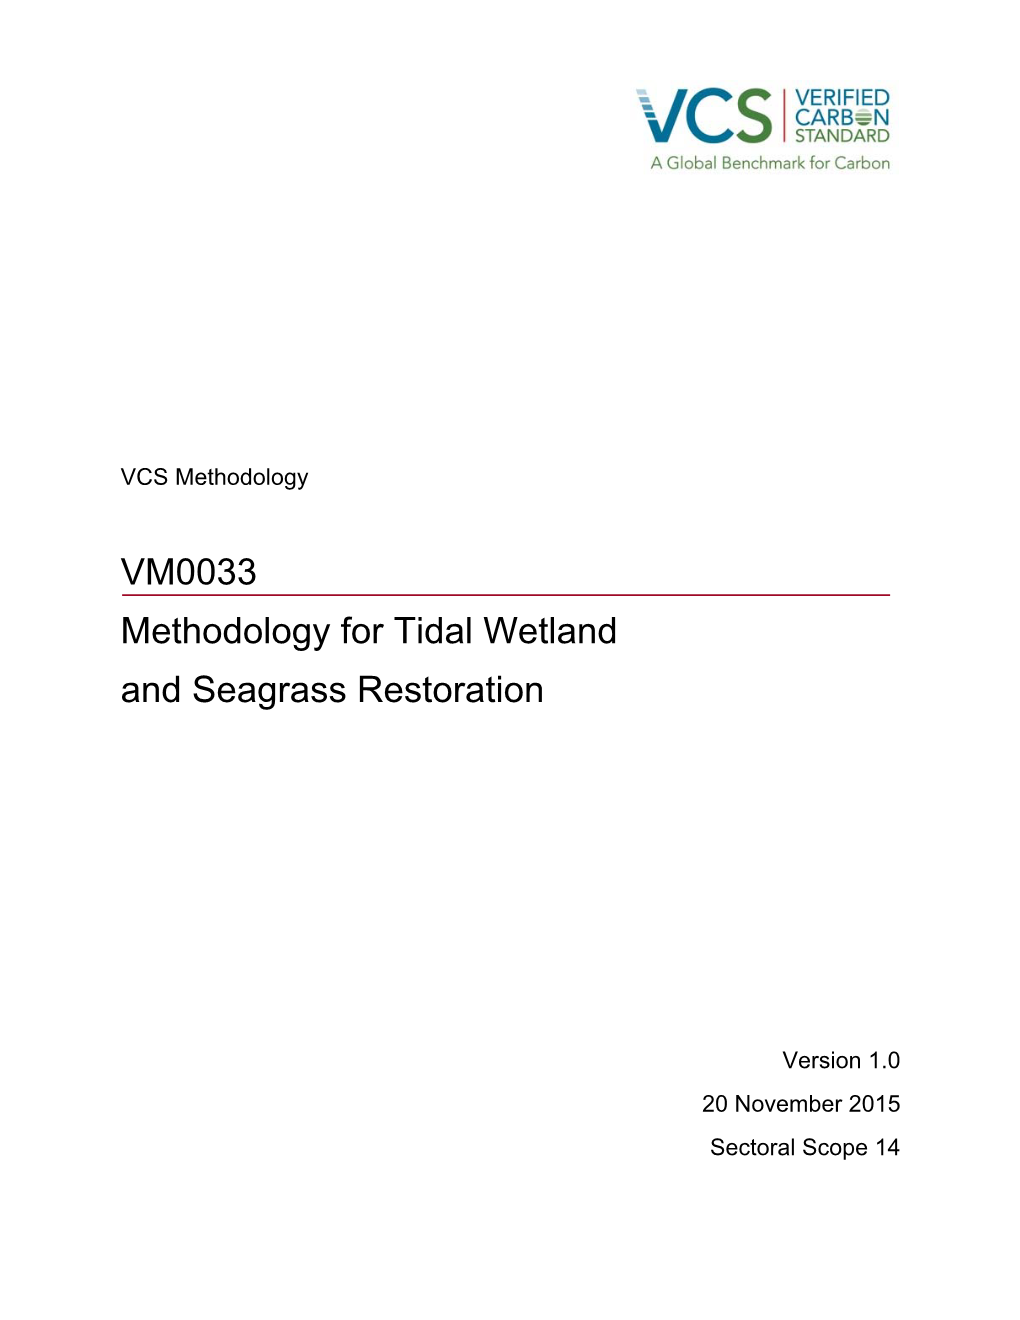 VM0033 Methodology for Tidal Wetland and Seagrass Restoration